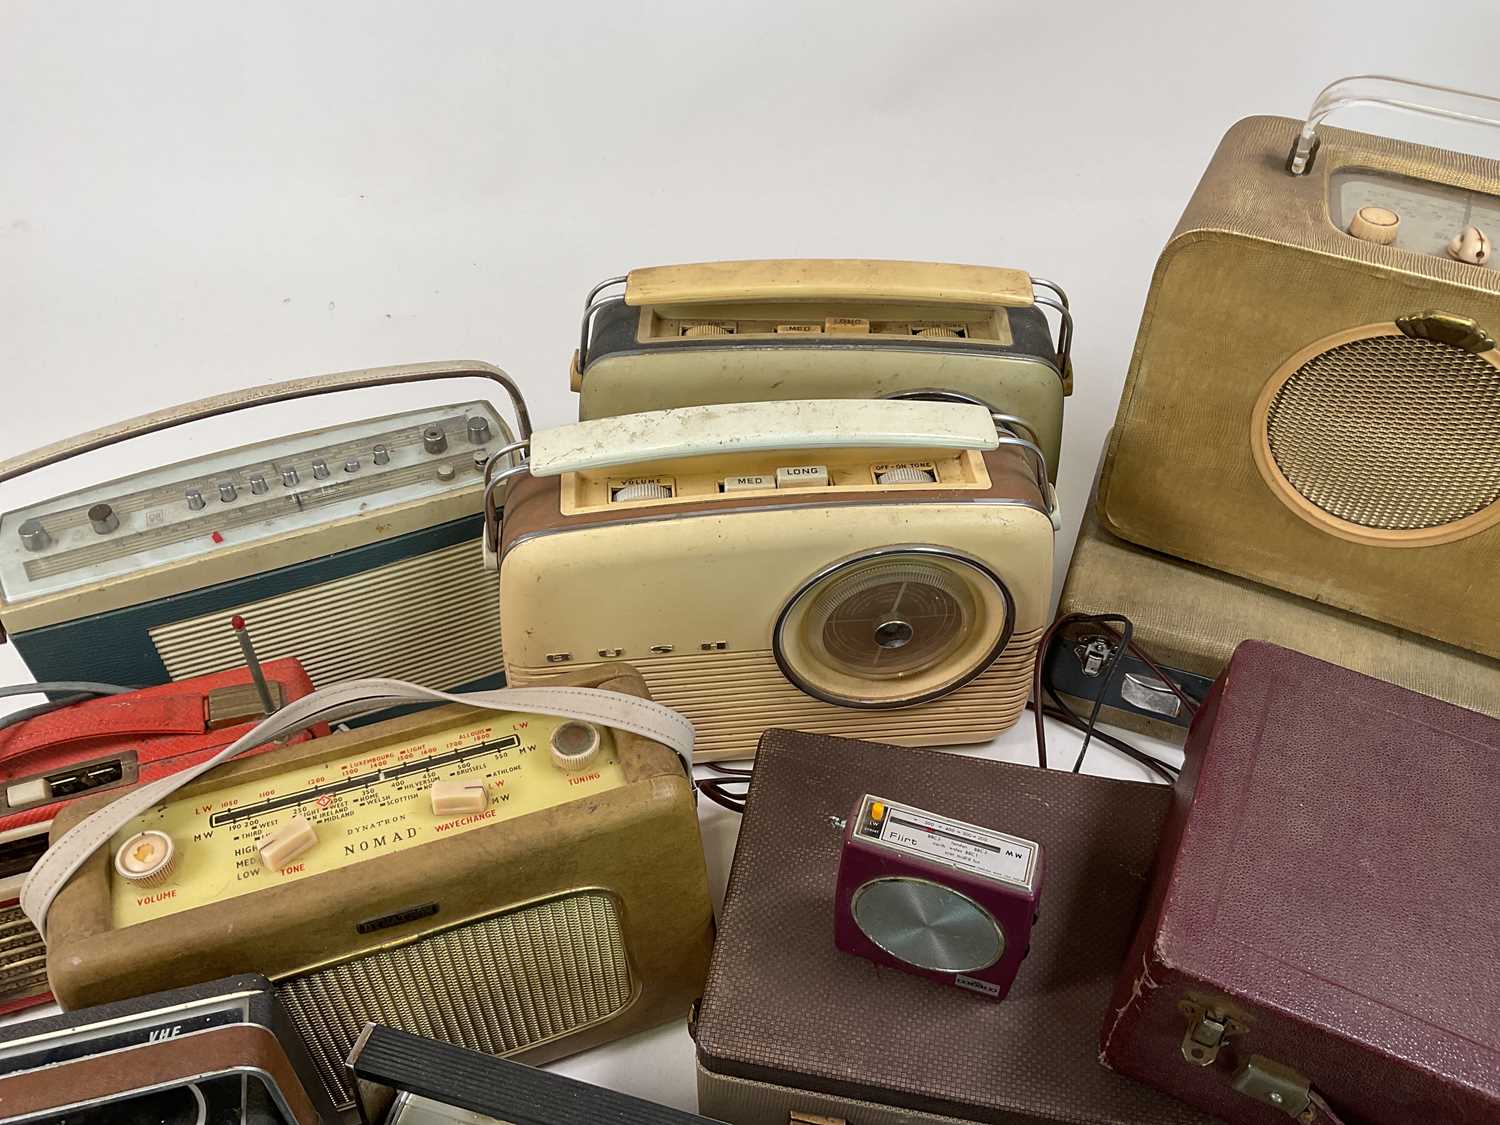 A quantity of mid 20th century radios including Hacker, Roberts, Bush, B&O etc. - Image 3 of 3